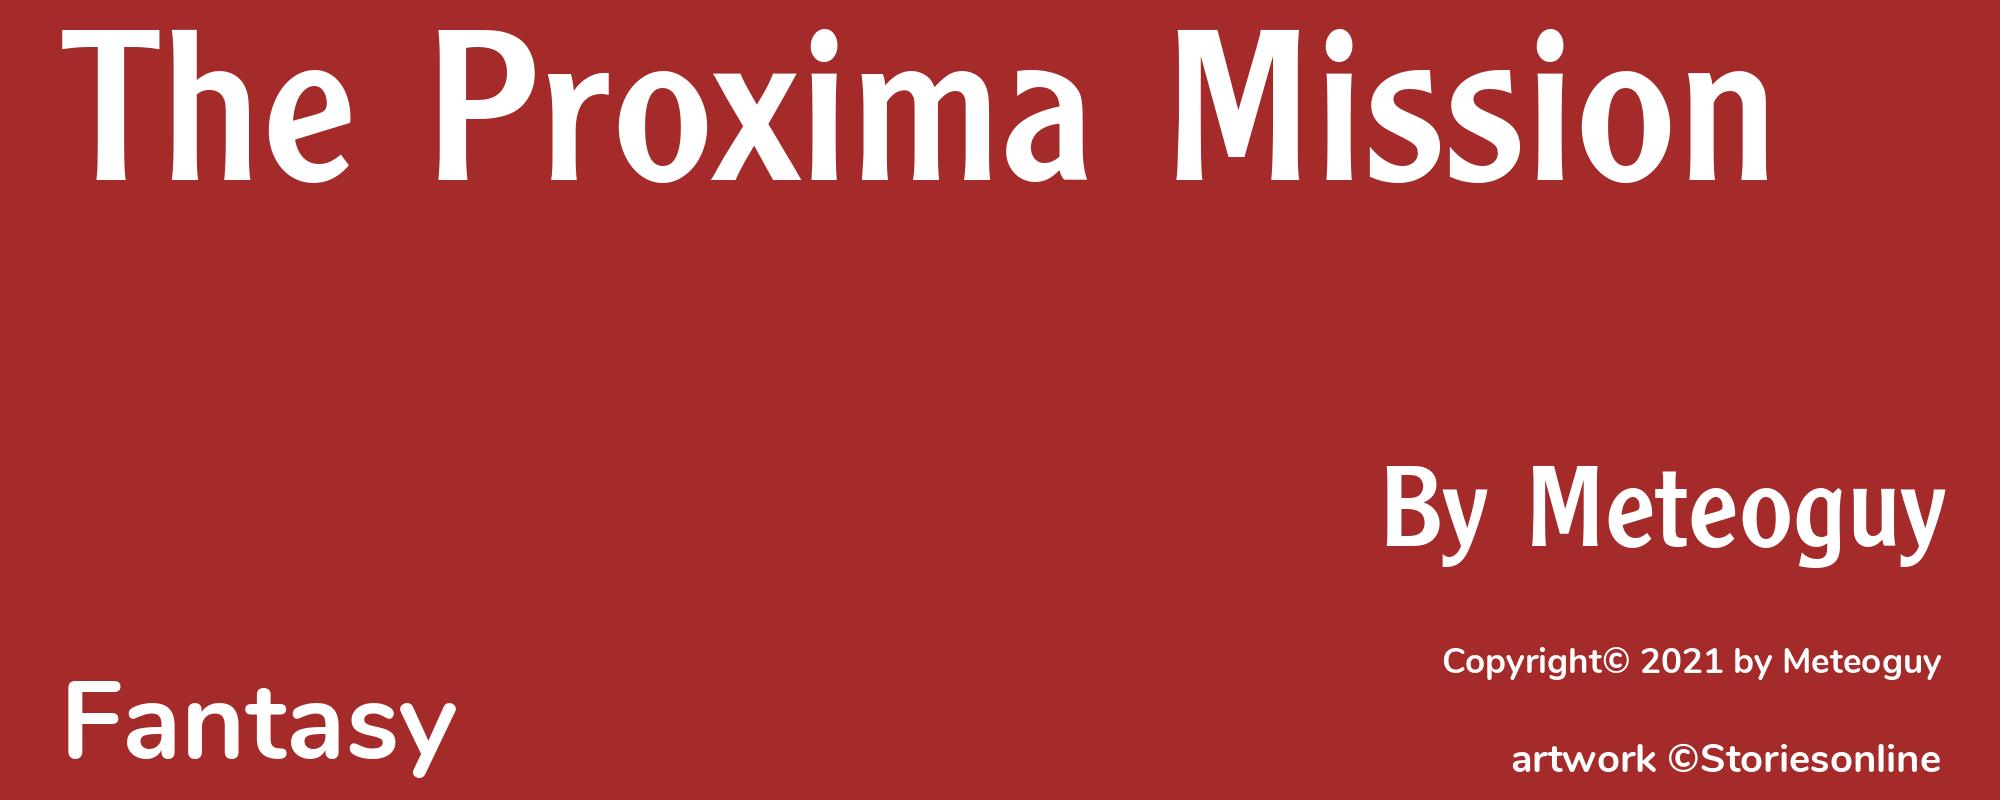 The Proxima Mission - Cover